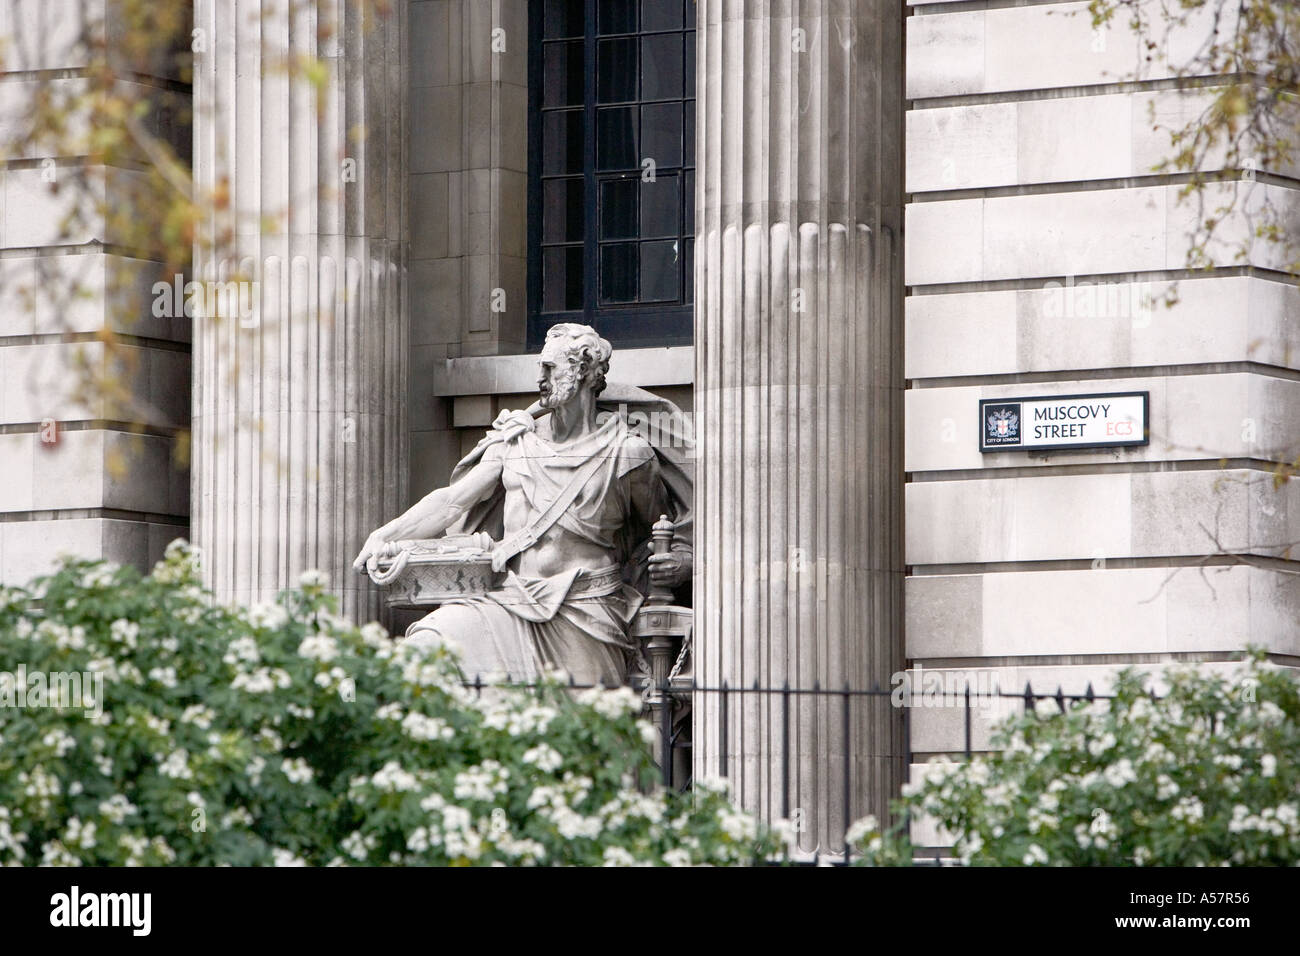 Statue in Muscovy Street London England Stockfoto